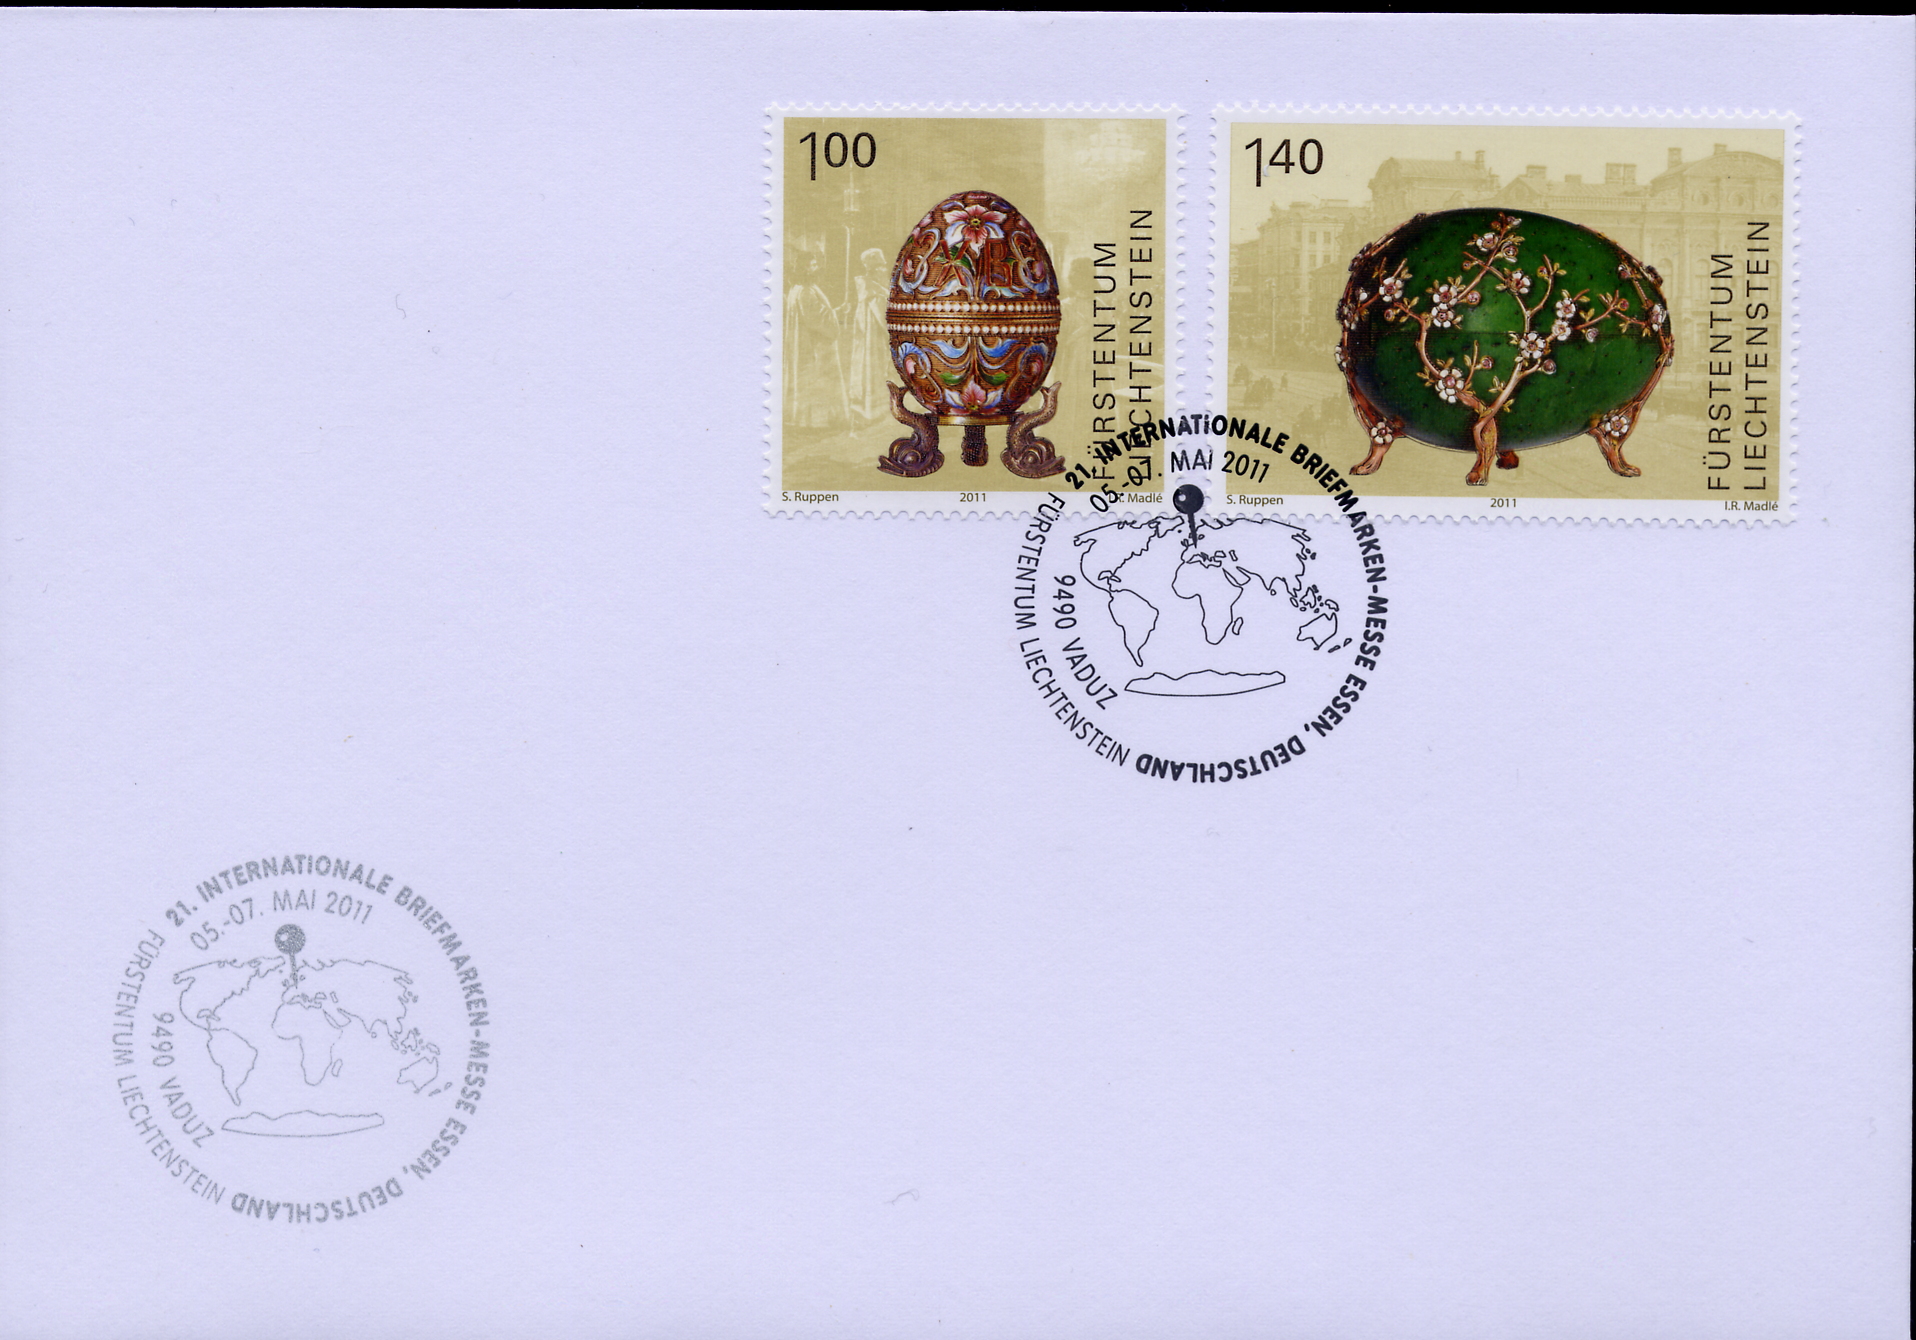 https://swiss-stamps.org/wp-content/uploads/2023/12/2011-5-Essen.jpg